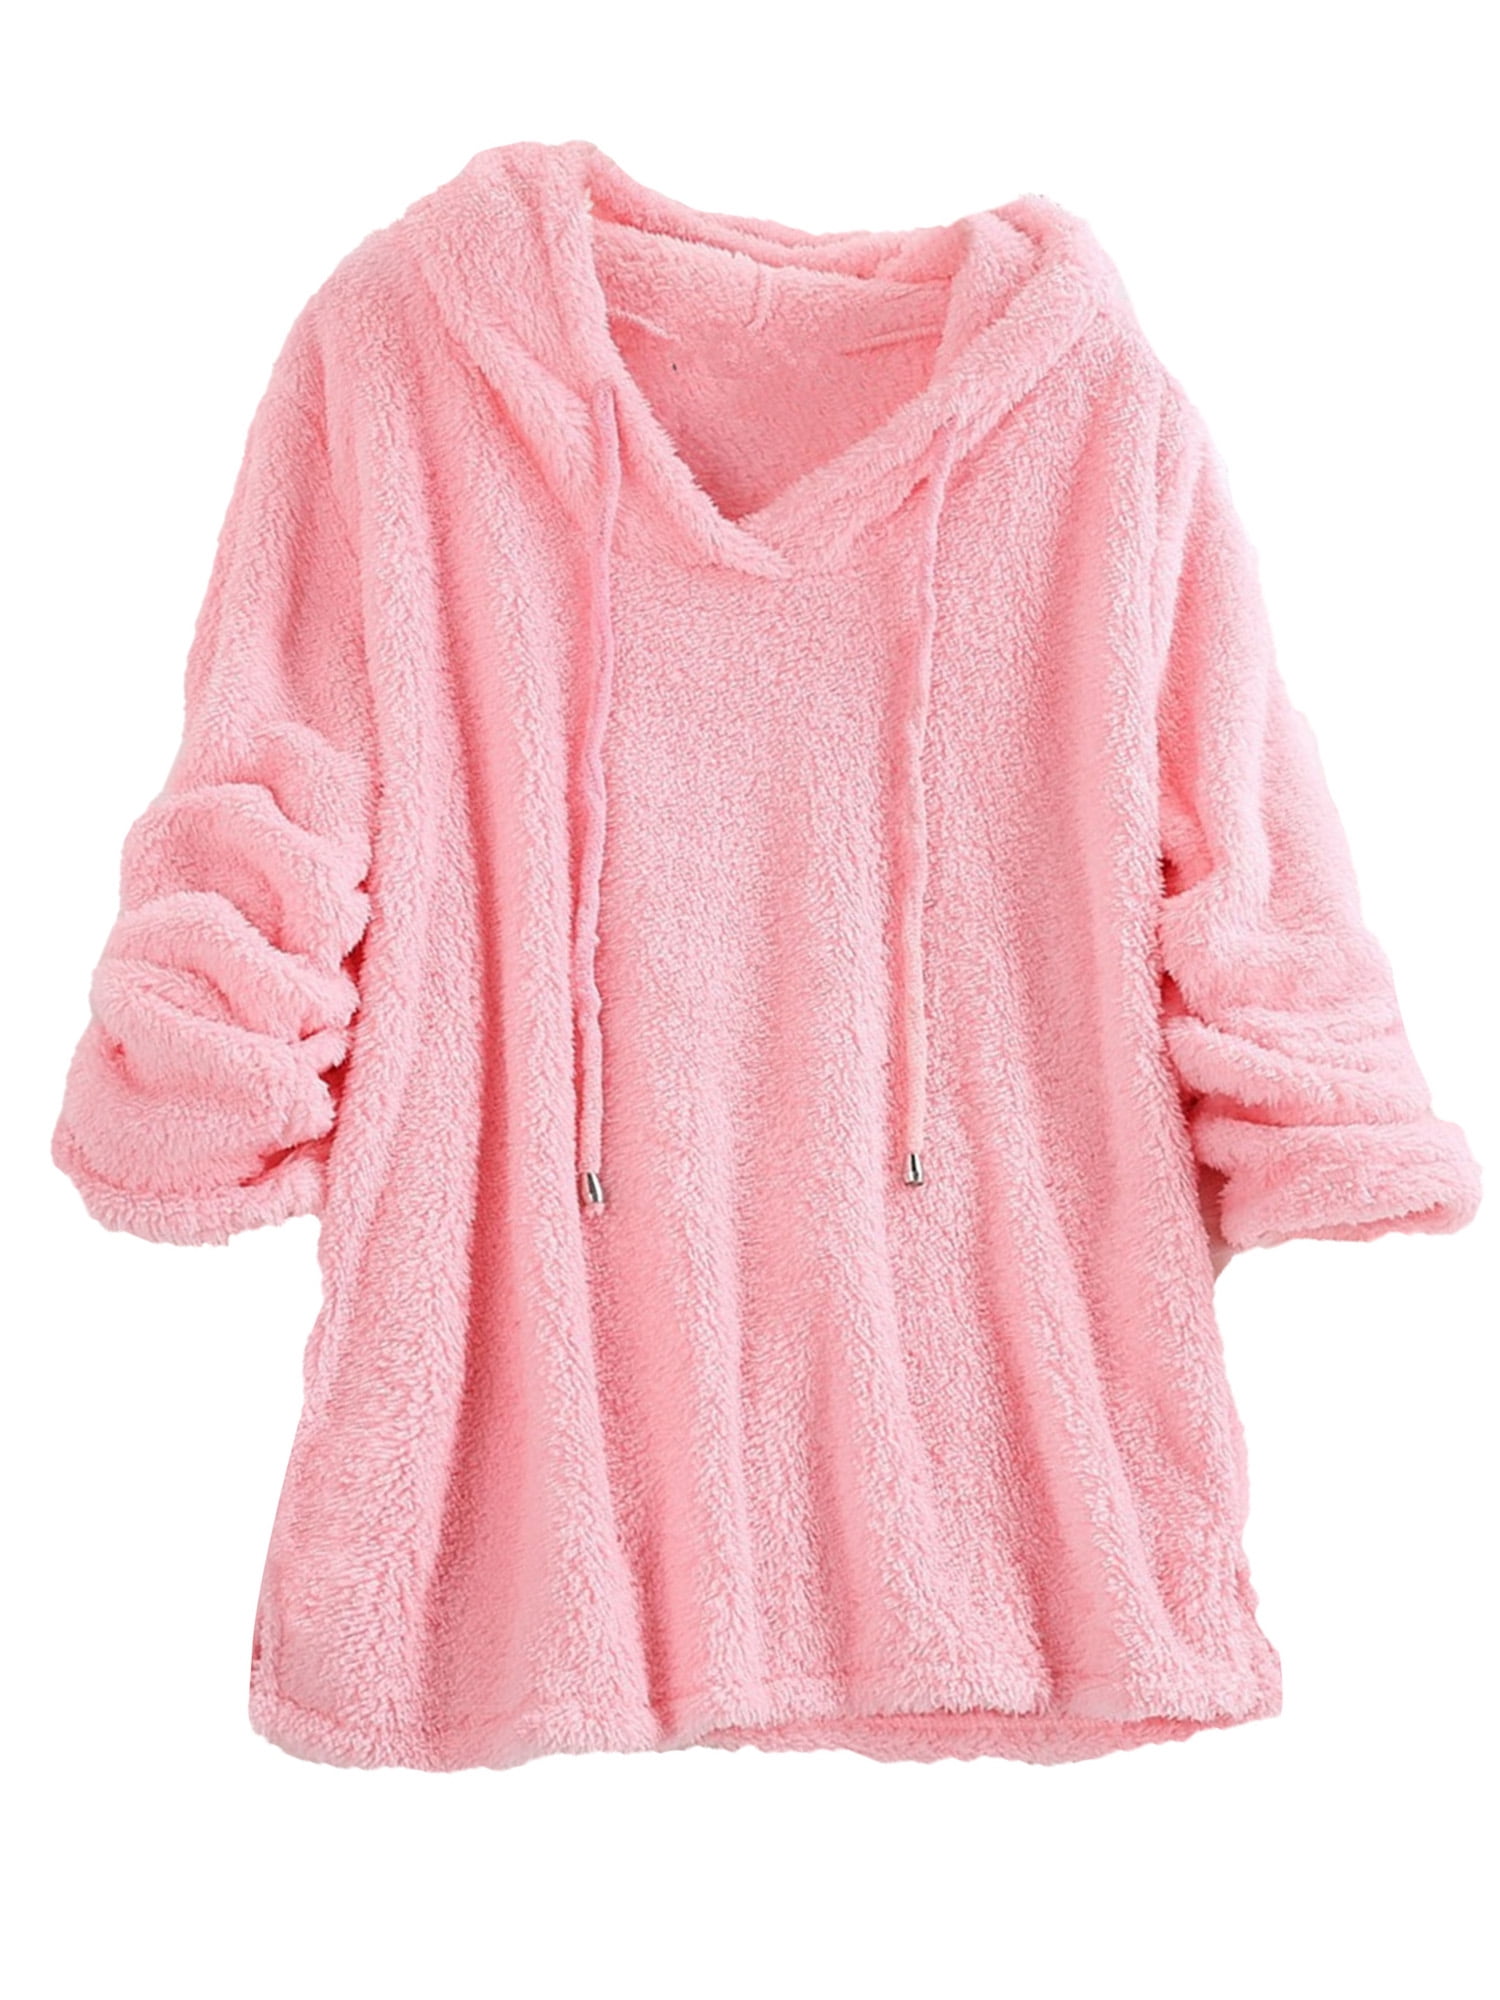 Lazzboy Jacket Hoodie Womens Ladies Teddy Sherpa Fluffy Button Plain/Leopard Sweatshirt UK 8-22 Plus Size Oversized